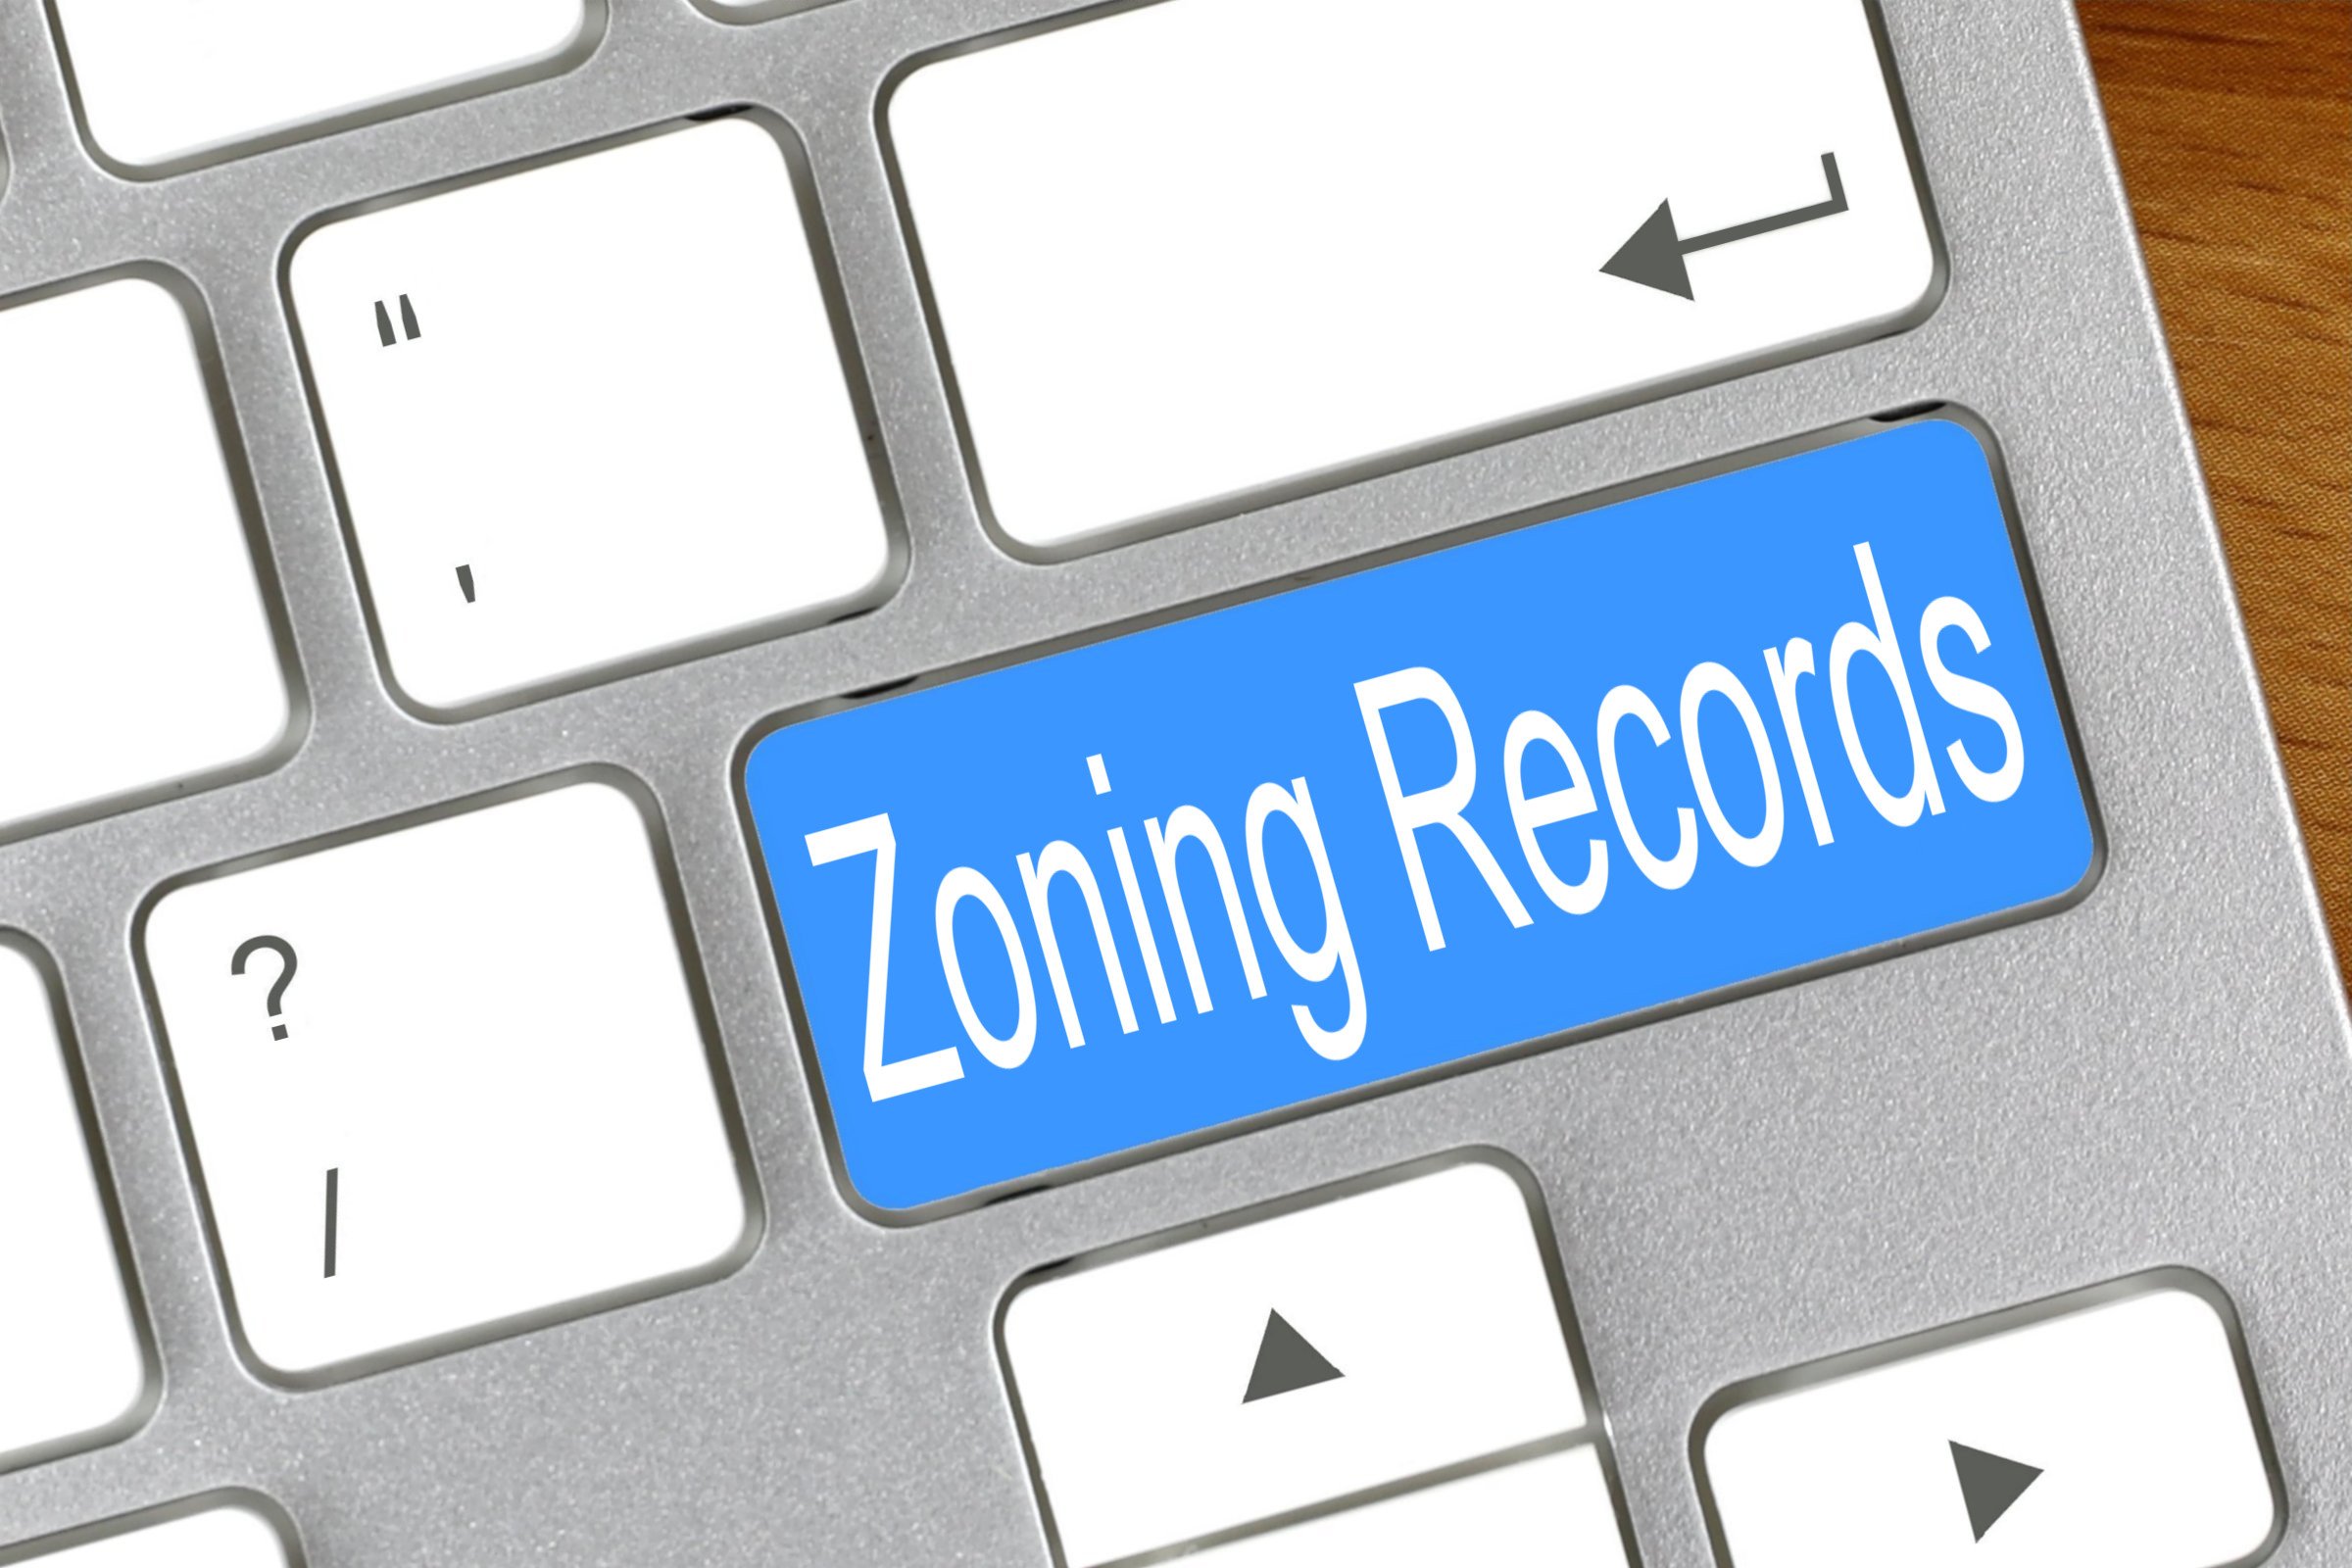 zoning records